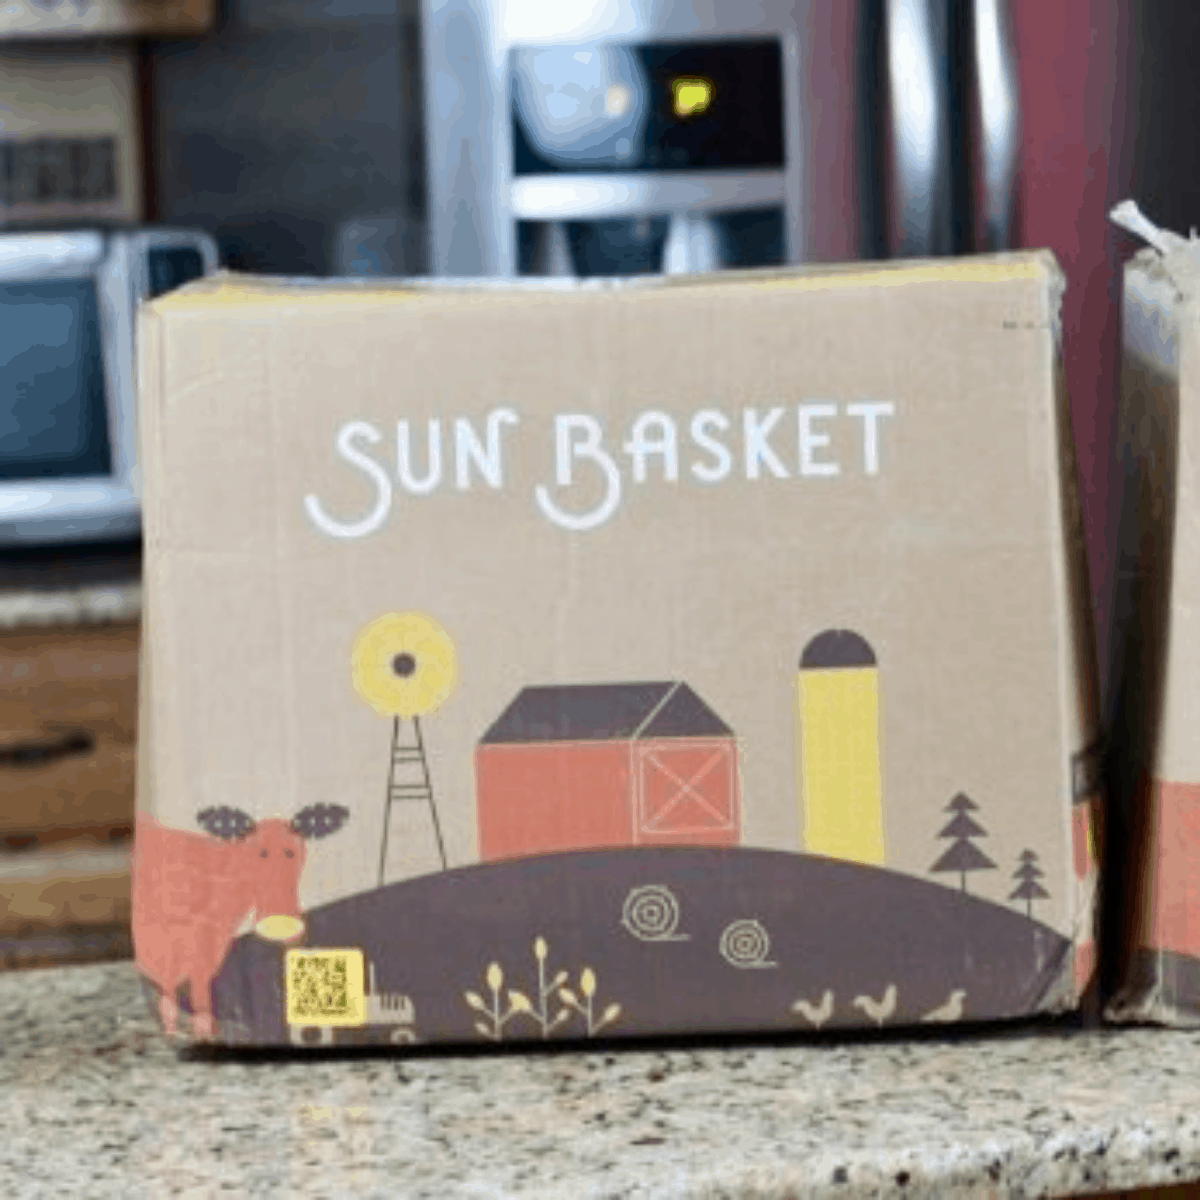 sun basket box on the counter